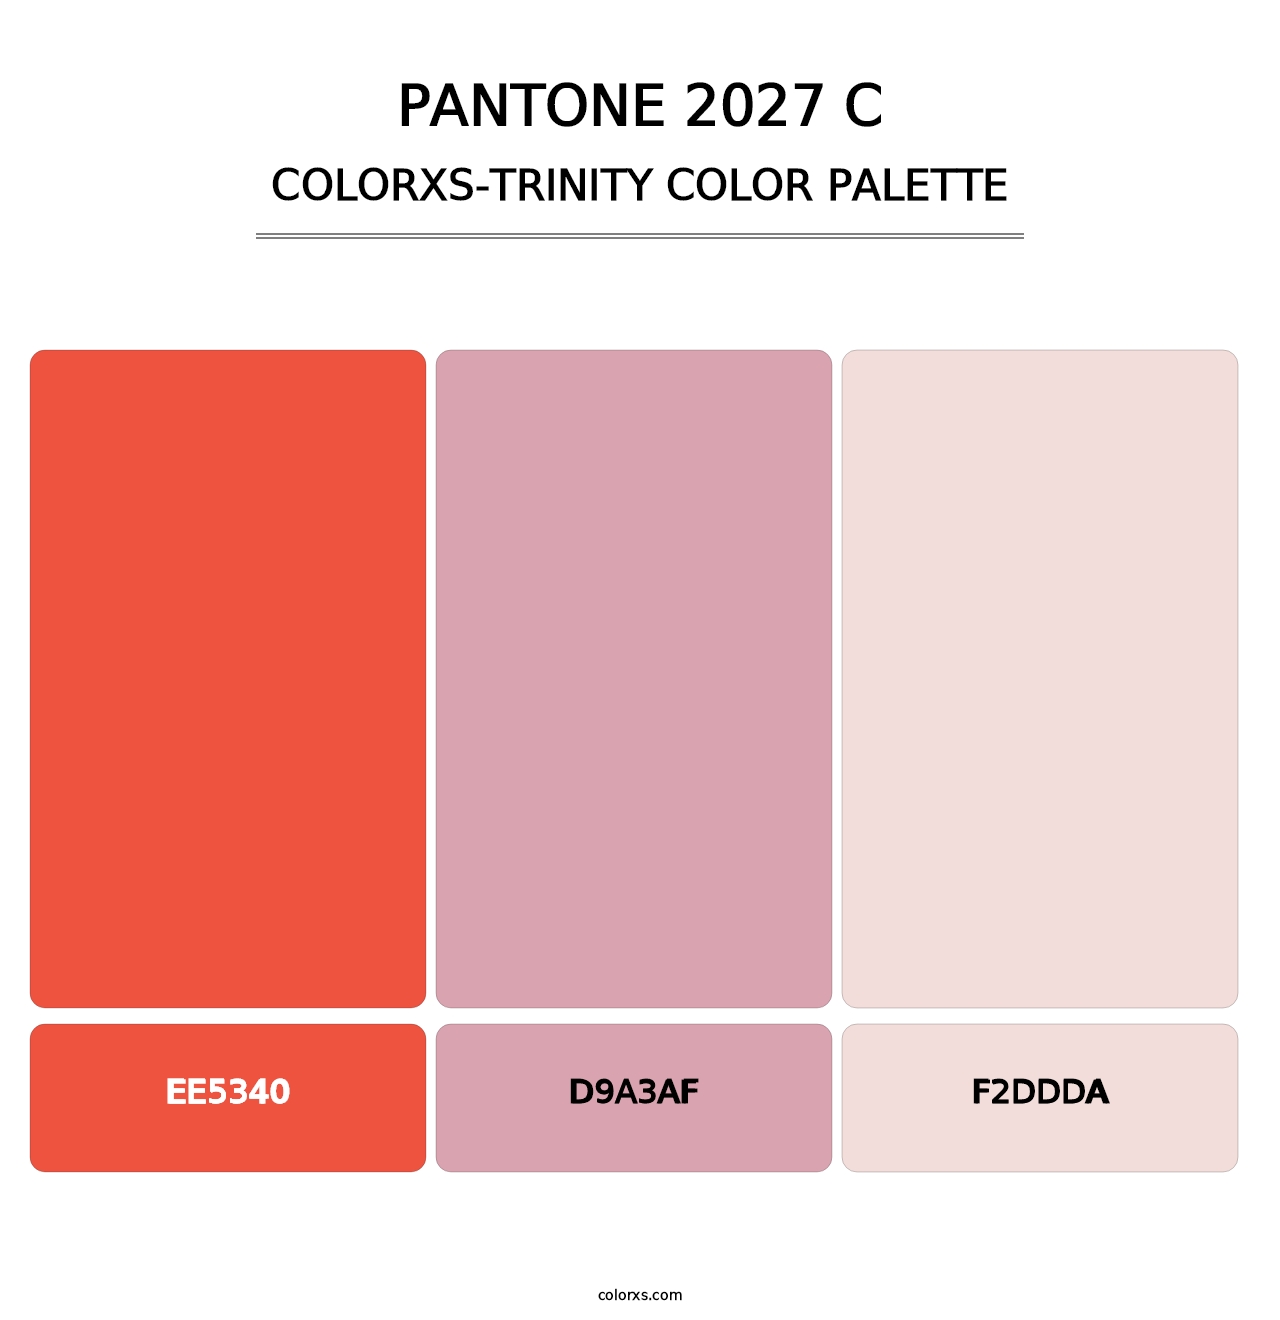 PANTONE 2027 C - Colorxs Trinity Palette